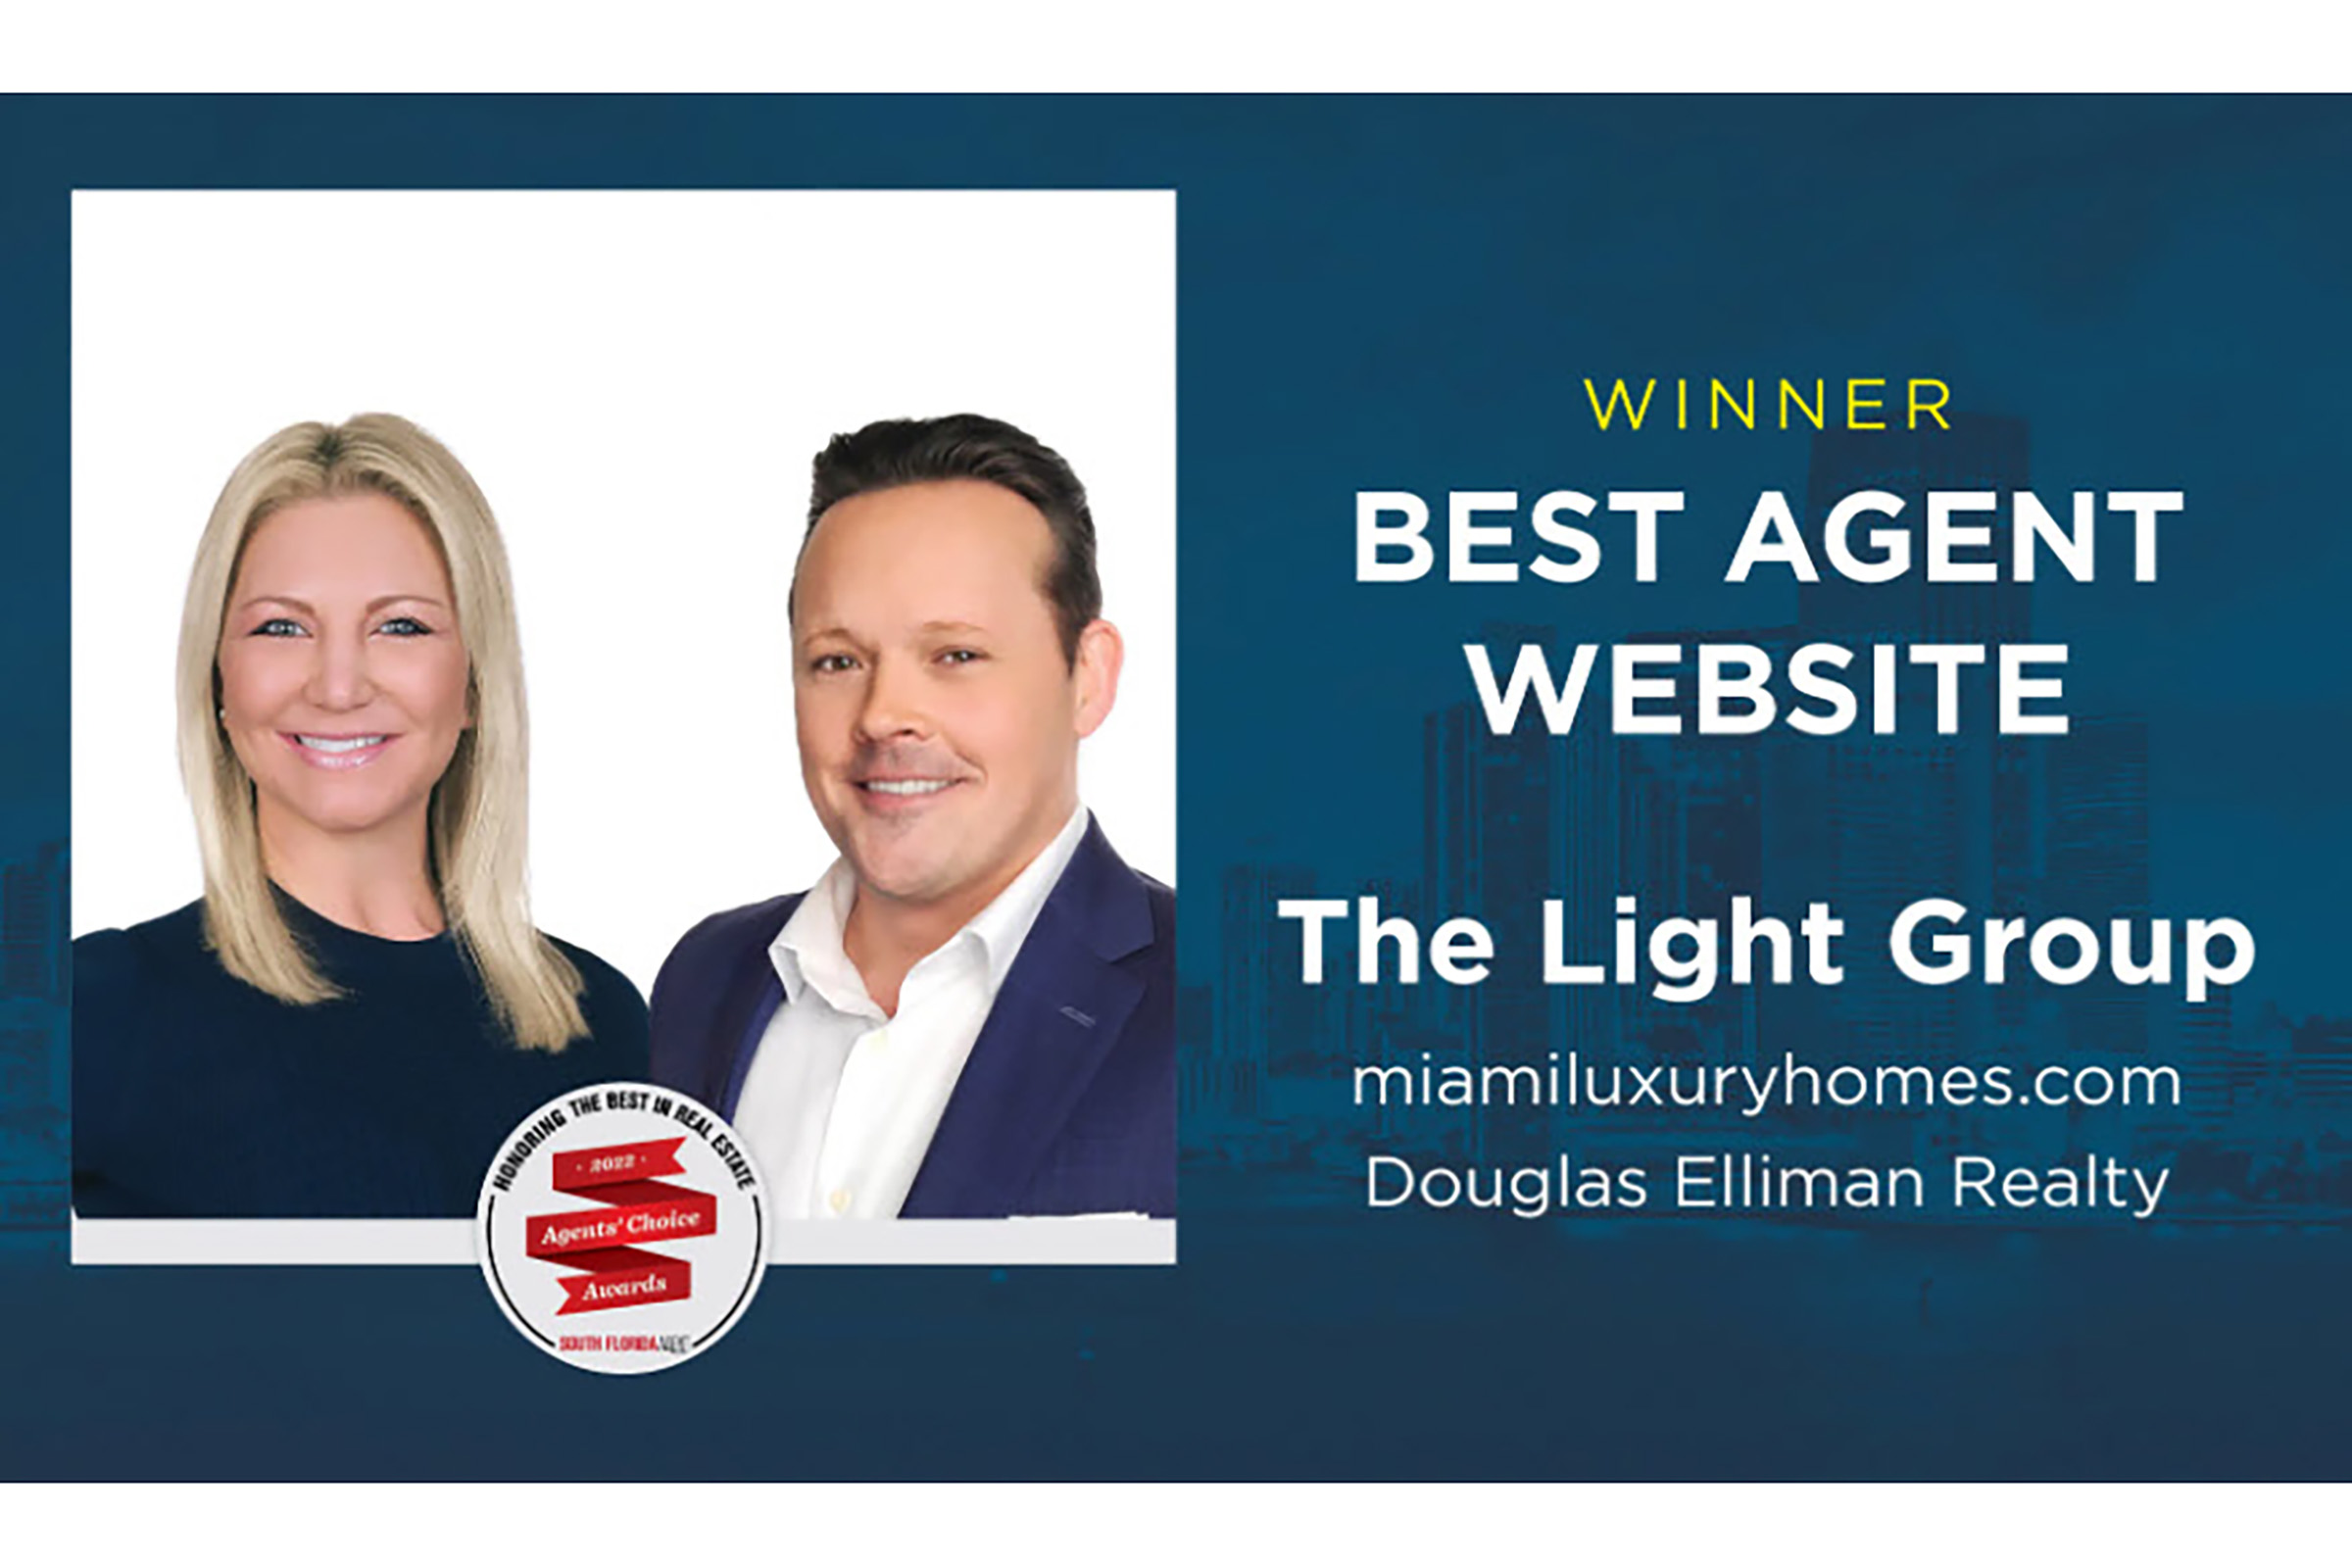 The Light Group Wins Best Agent Website 2022